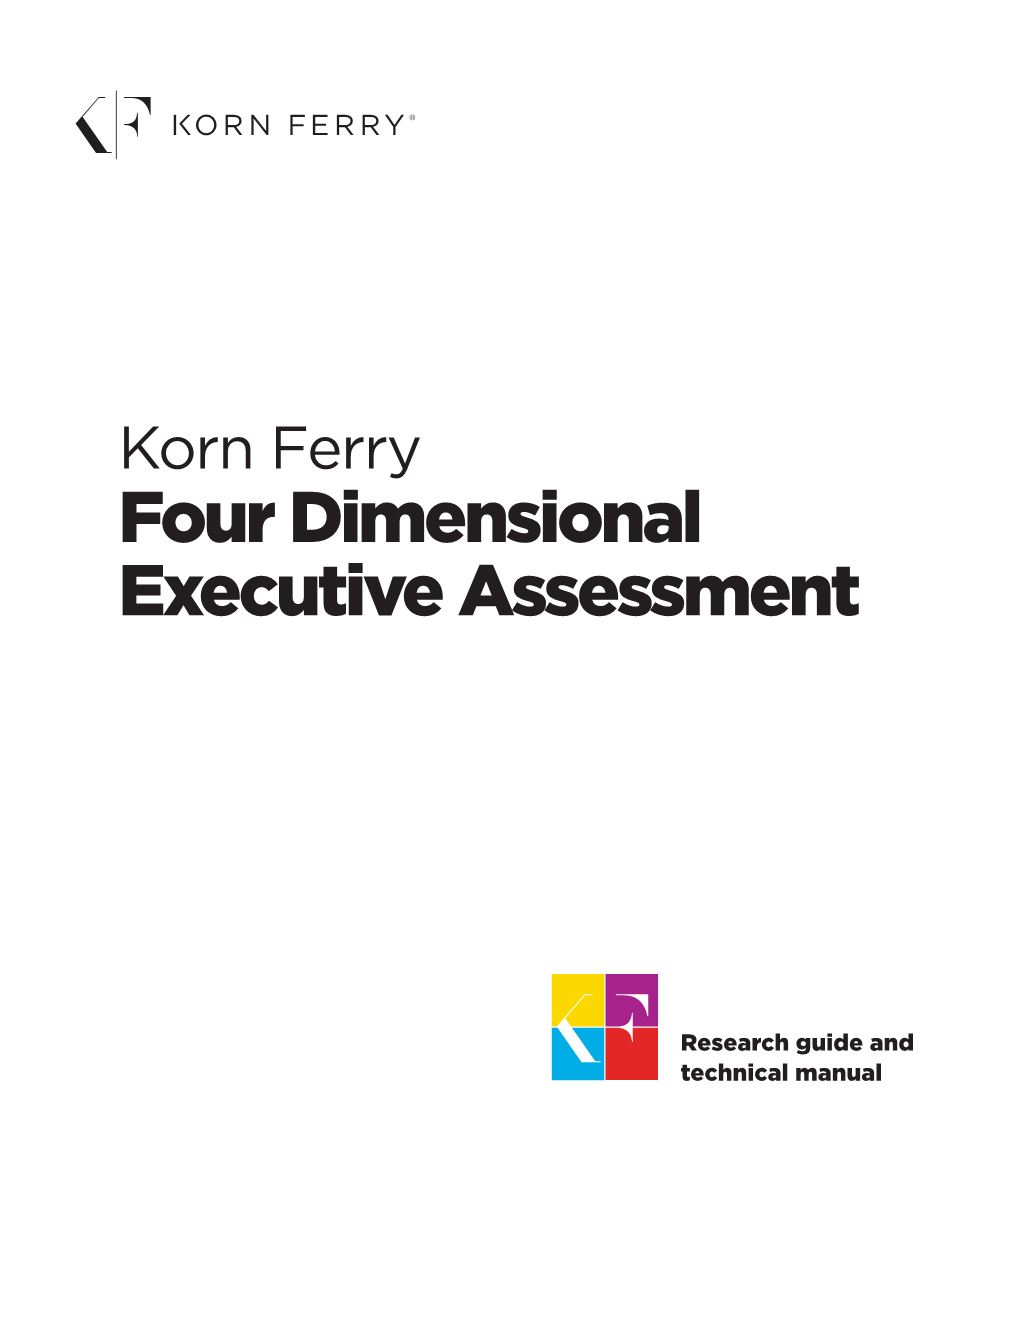 Four Dimensional Executive Assessment